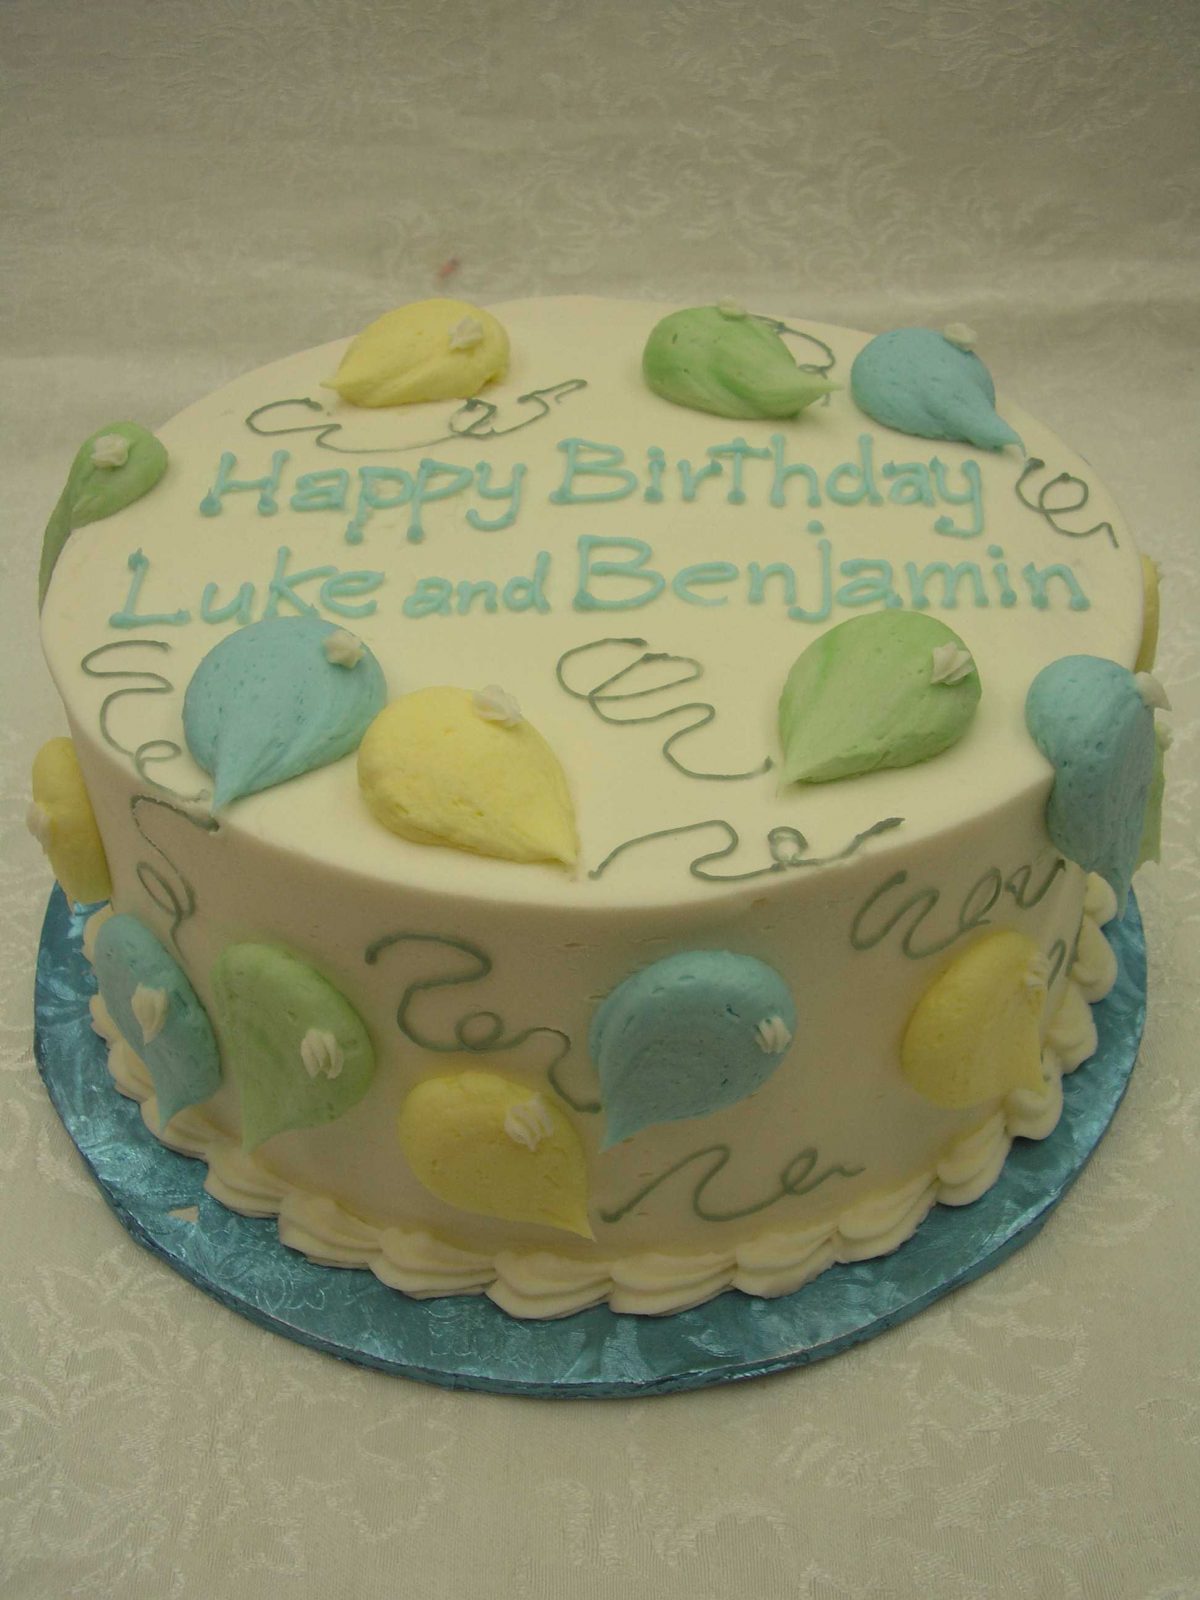 Individual balloons on birthday cake